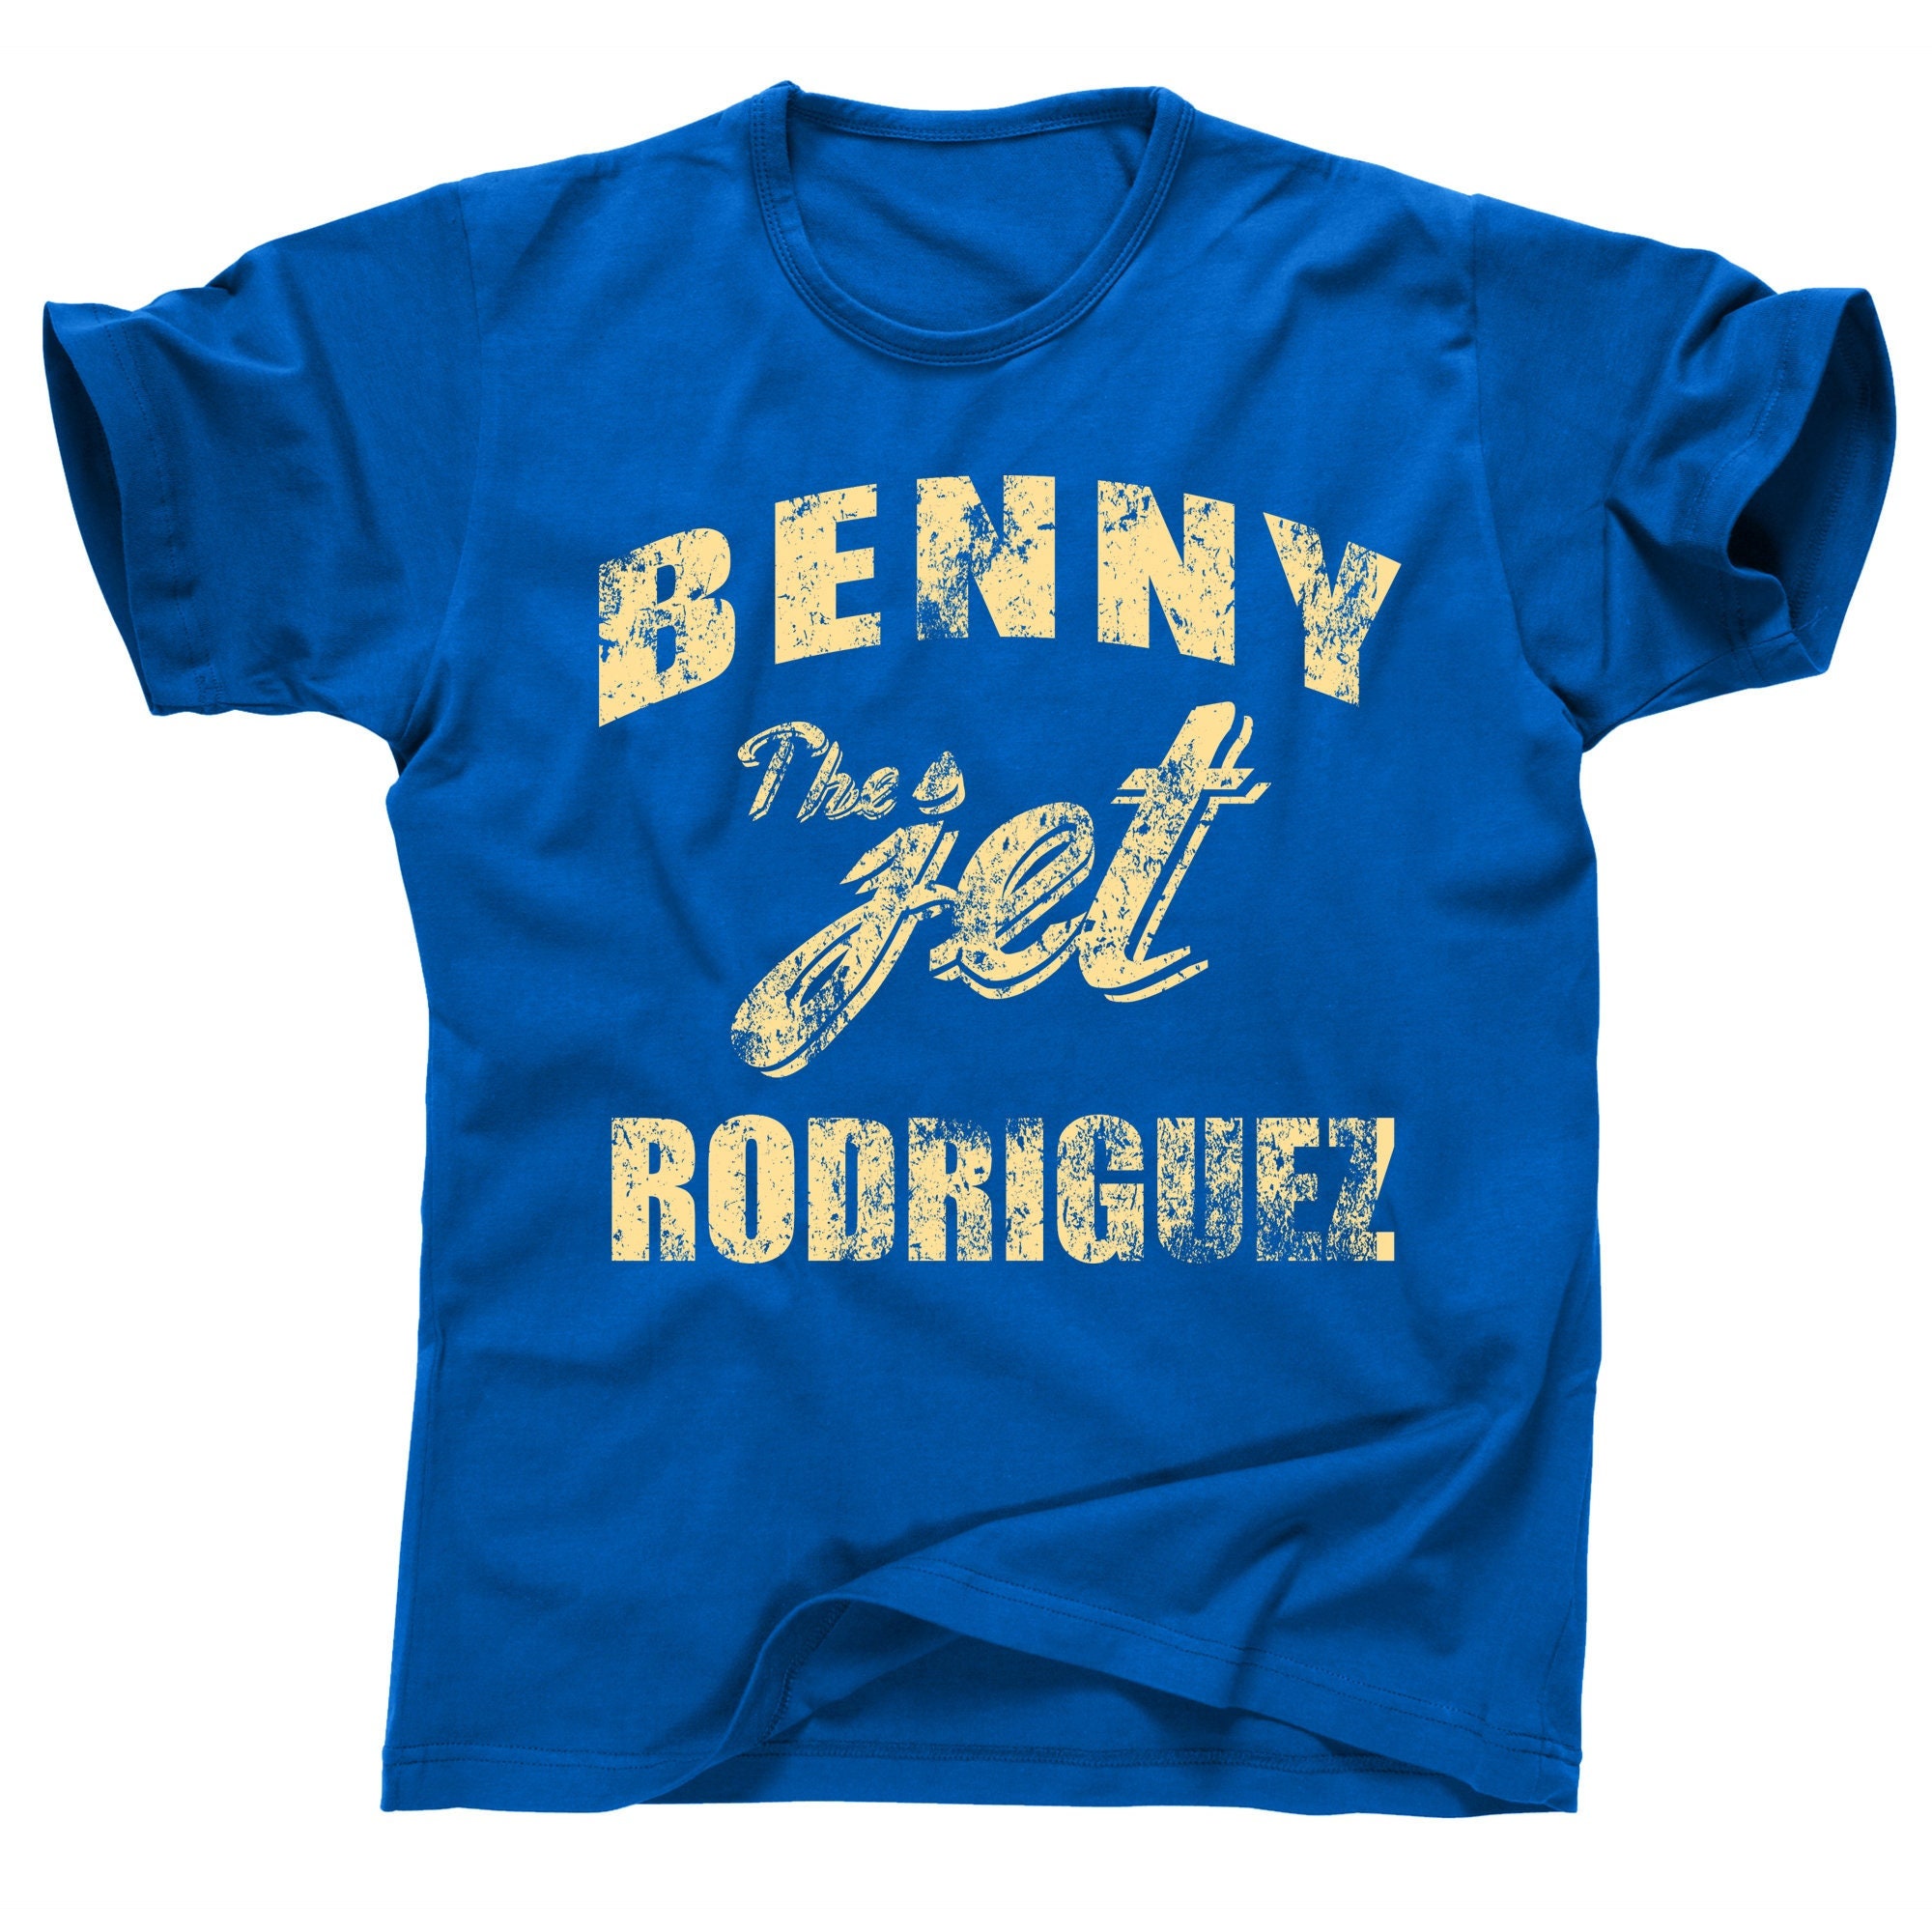 The Sandlot RSVLTS Benny Rodriguez The Jet T-shirt Movie 3 Extra Large 3XL